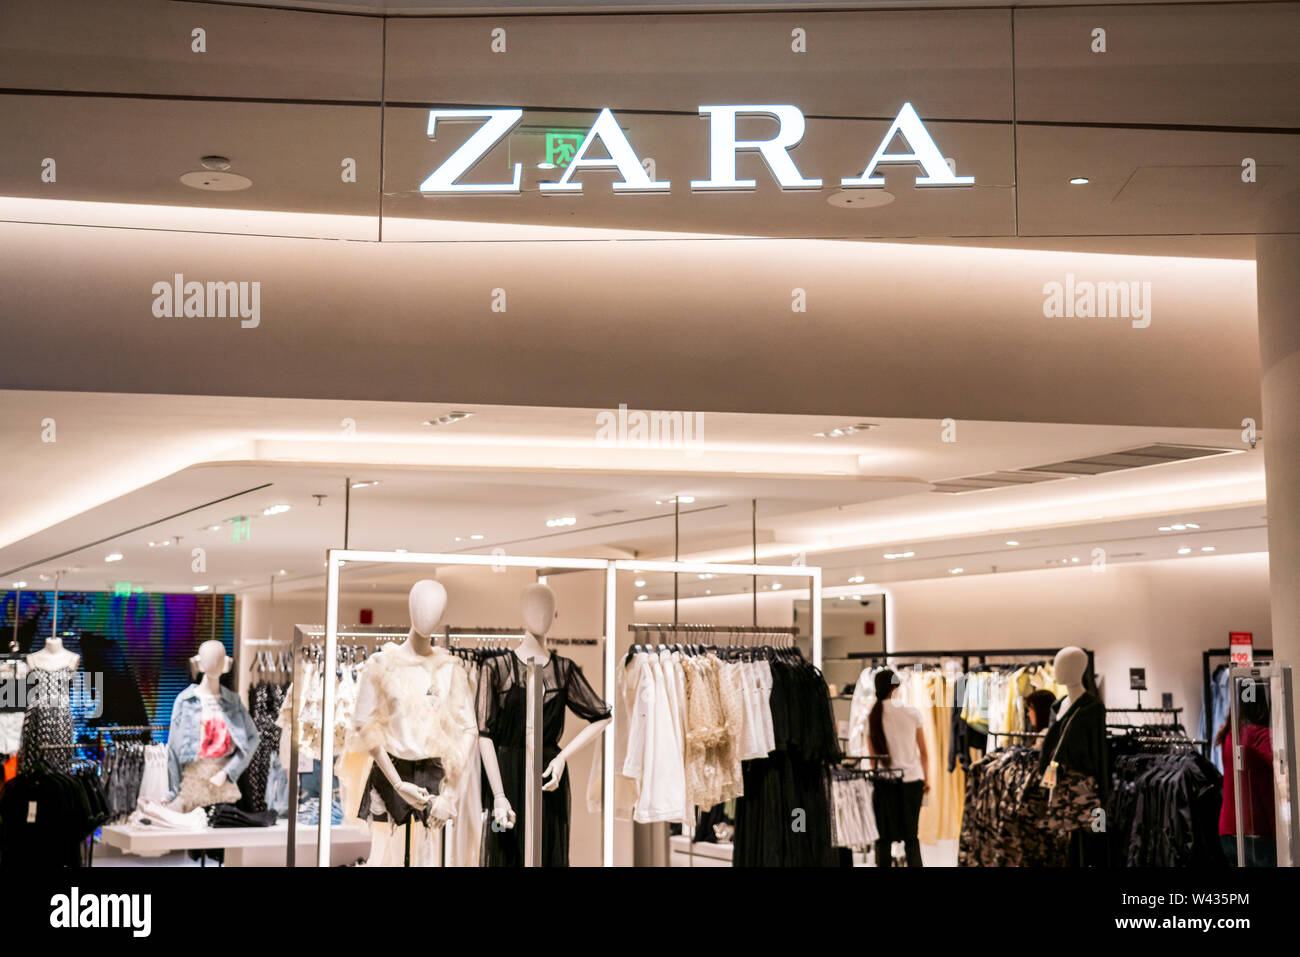 Spanish fast fashion retailer Zara store and logo seen in Shanghai Stock  Photo - Alamy